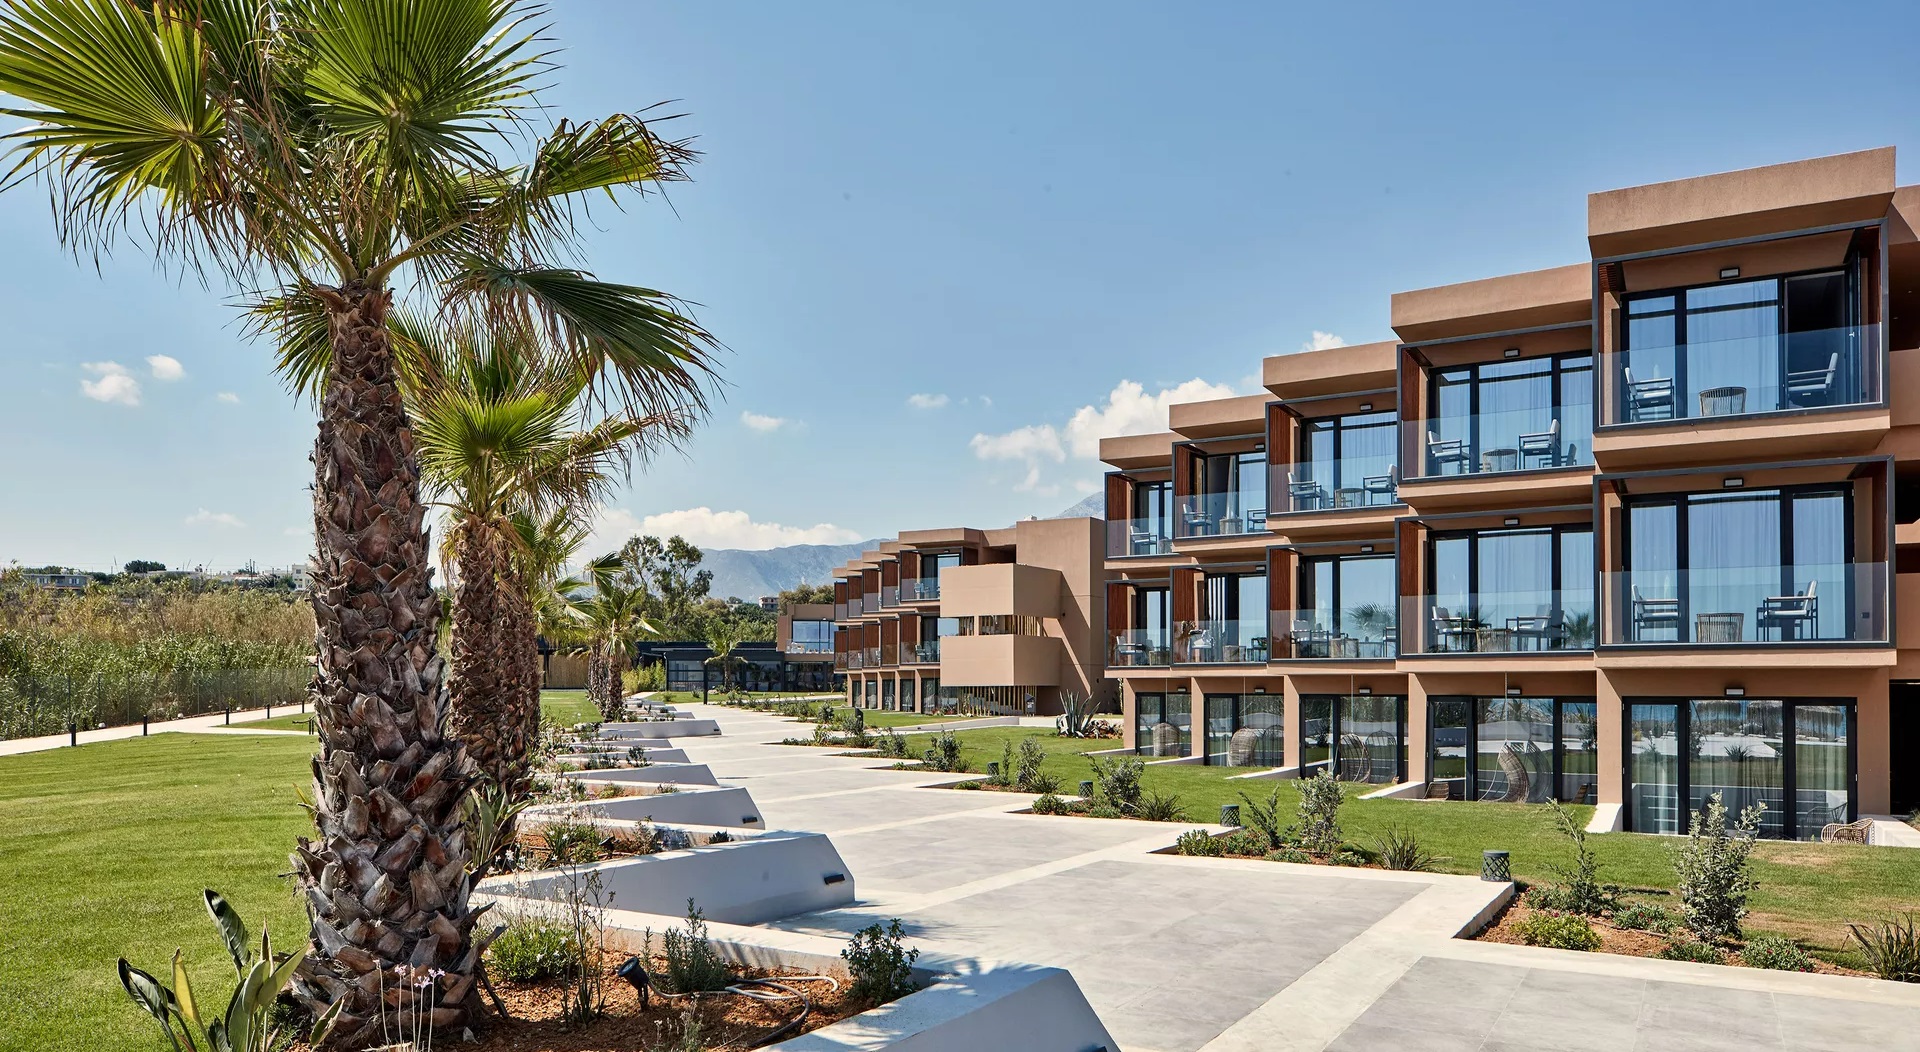 5* La Mer Resort &amp; Spa - Γεωργιούπολη, Κρήτη ✦ 4 Ημέρες (3 Διανυκτερεύσεις) ✦ 2 άτομα ✦ 2 ✦ έως 30/09/2022 ✦ Μπροστά στην παραλία!